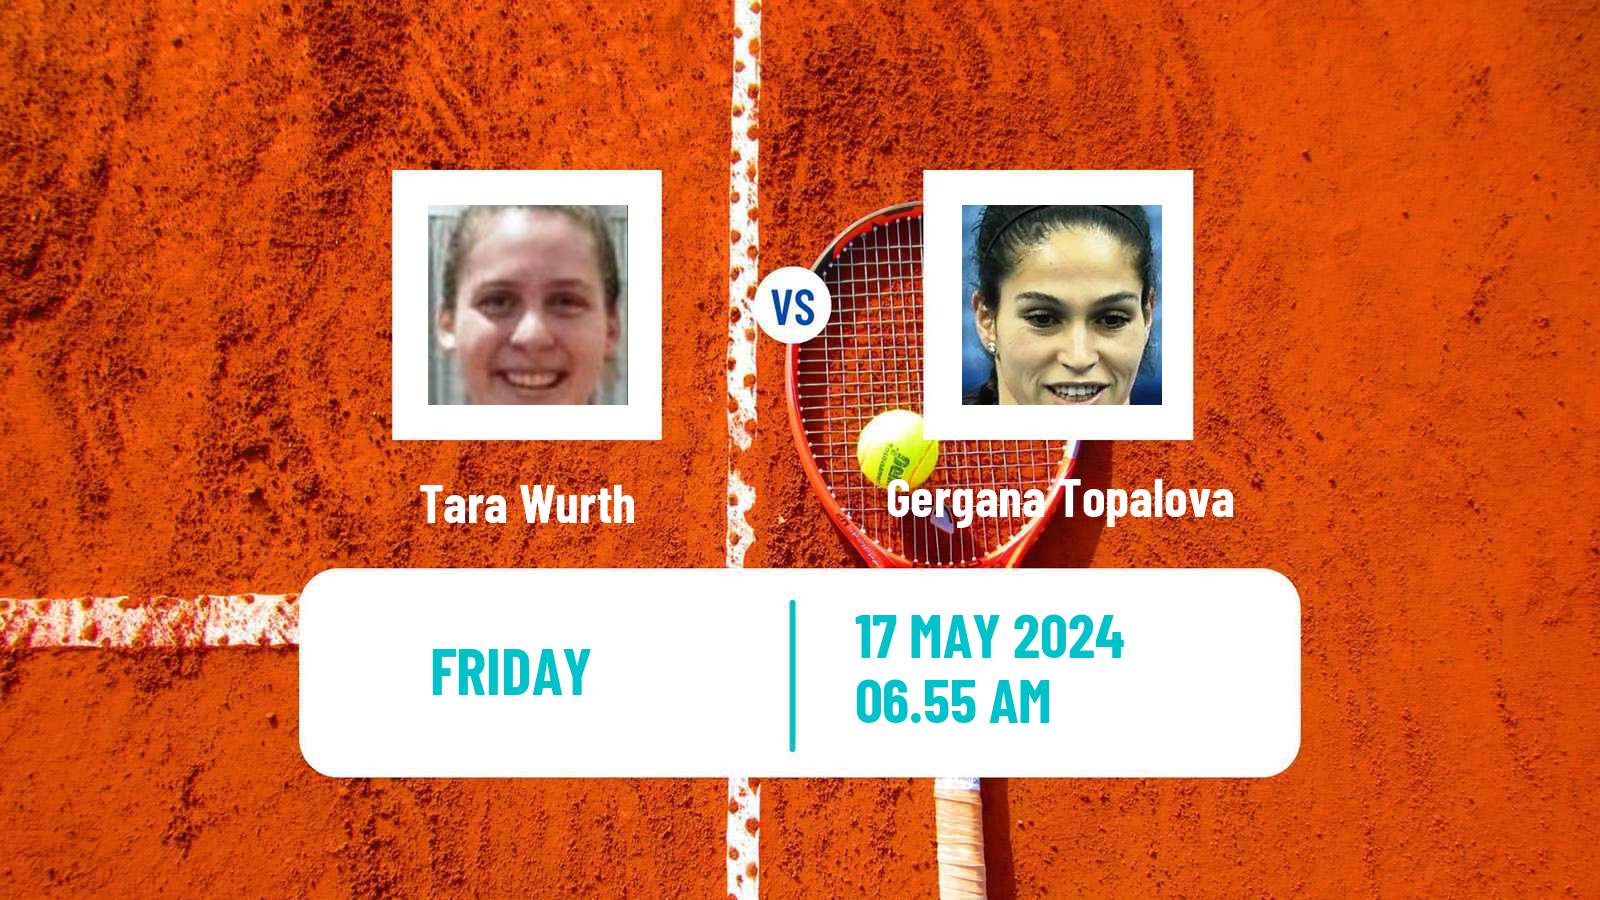 Tennis ITF W75 Zagreb Women Tara Wurth - Gergana Topalova